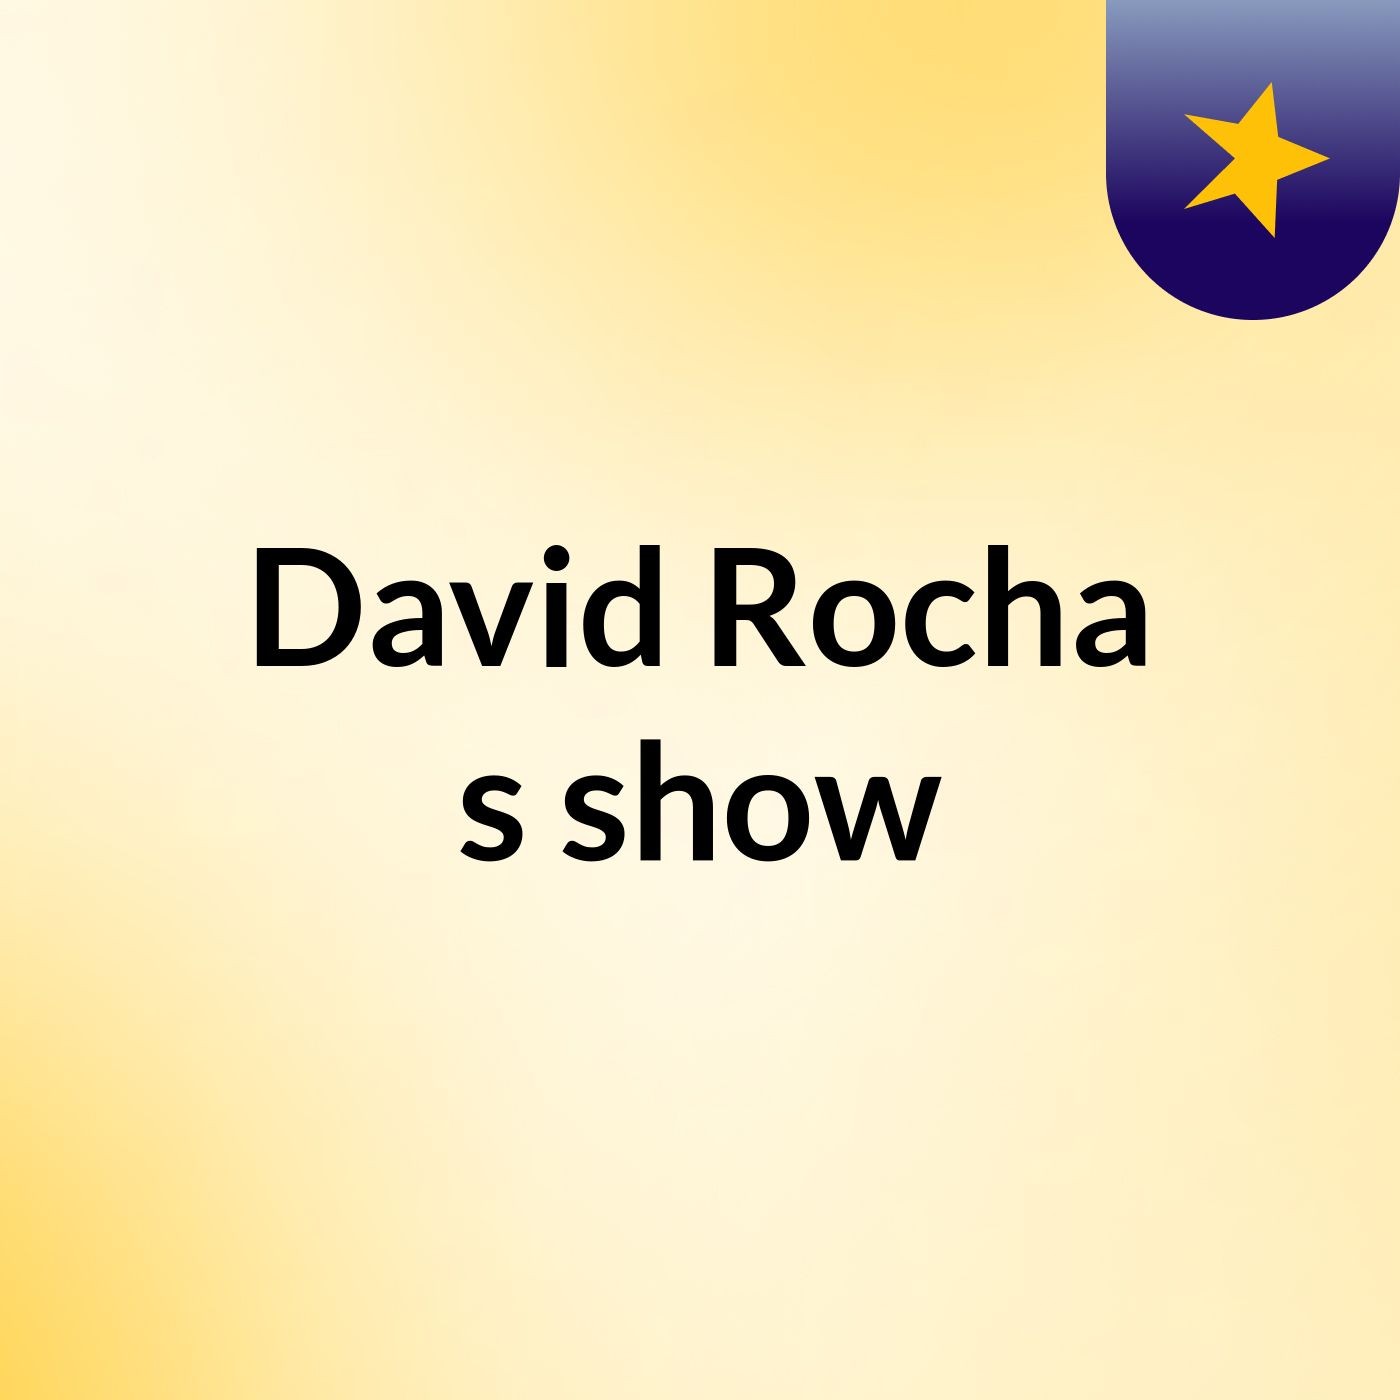 David Rocha's show